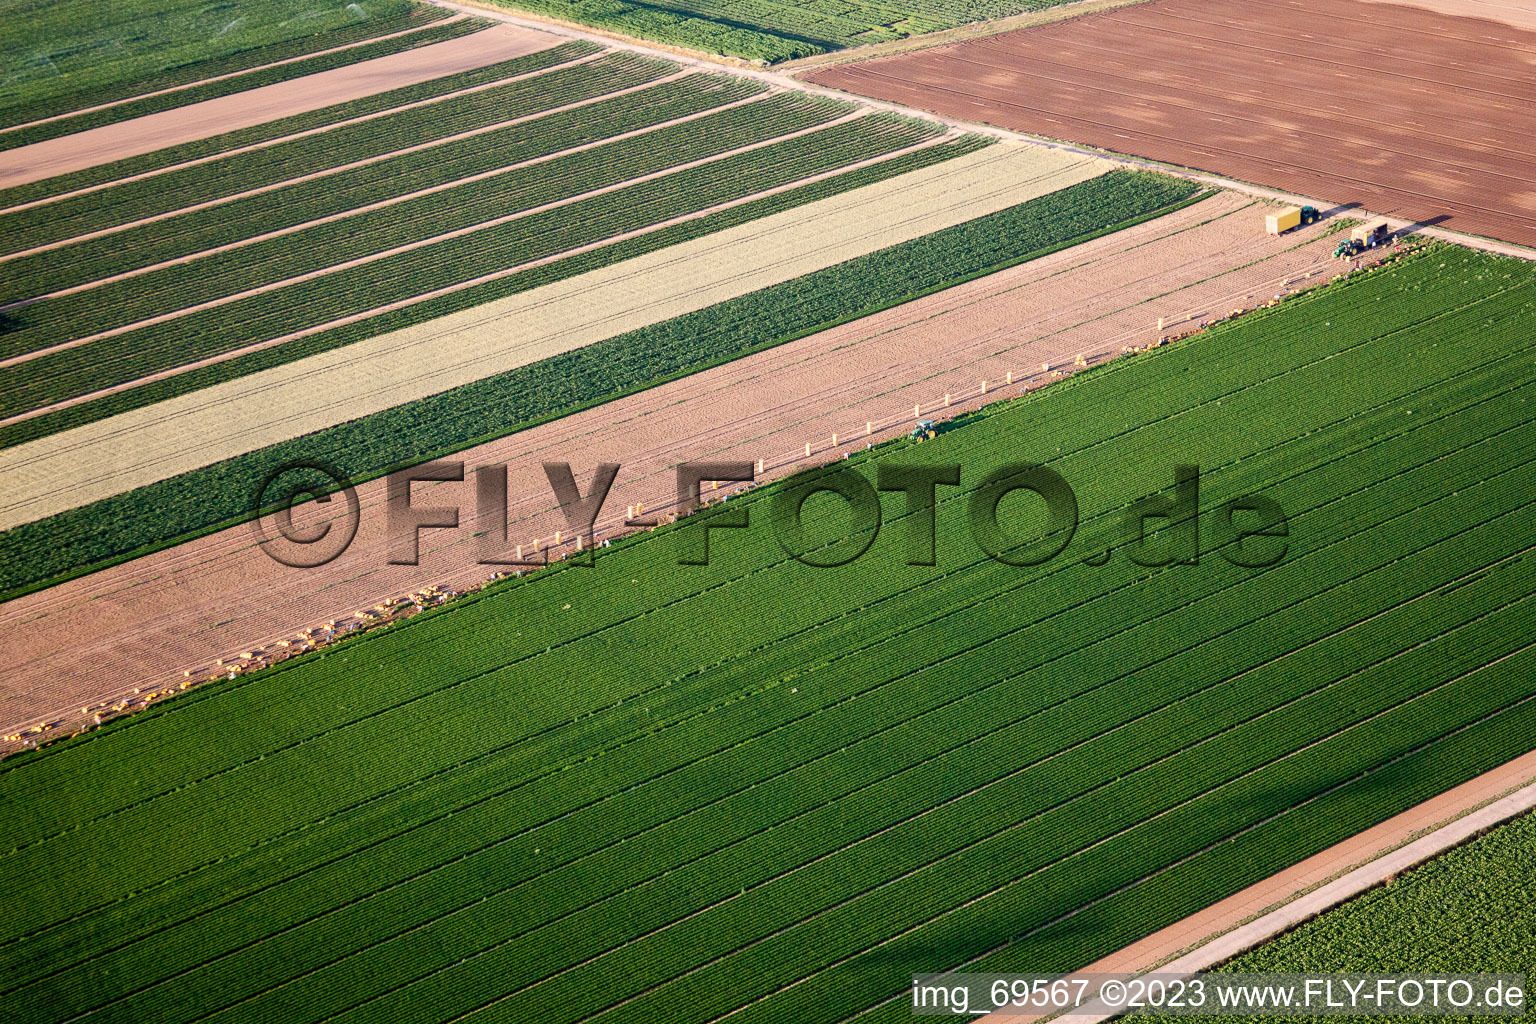 Aerial view of Vegetable harvest in the Palatinate in the district Dannstadt in Dannstadt-Schauernheim in the state Rhineland-Palatinate, Germany